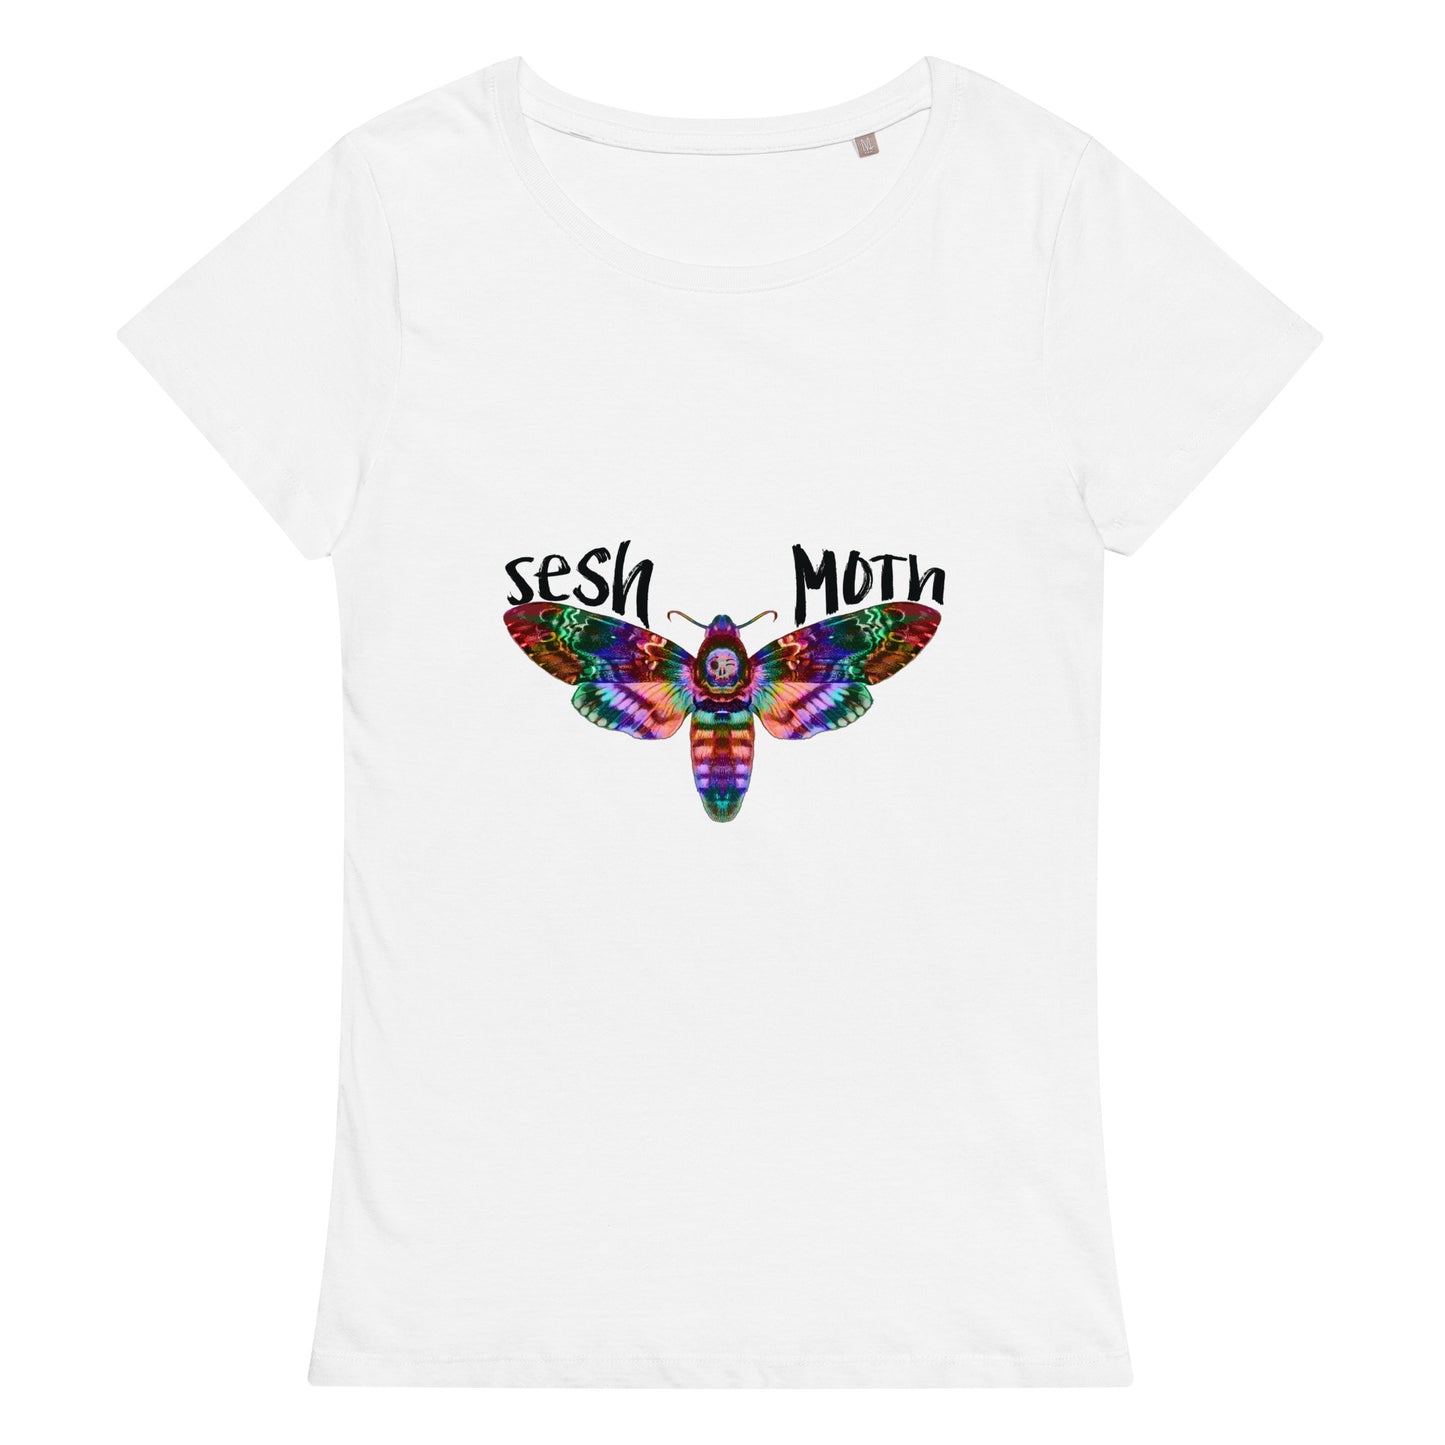 Sesh Moth